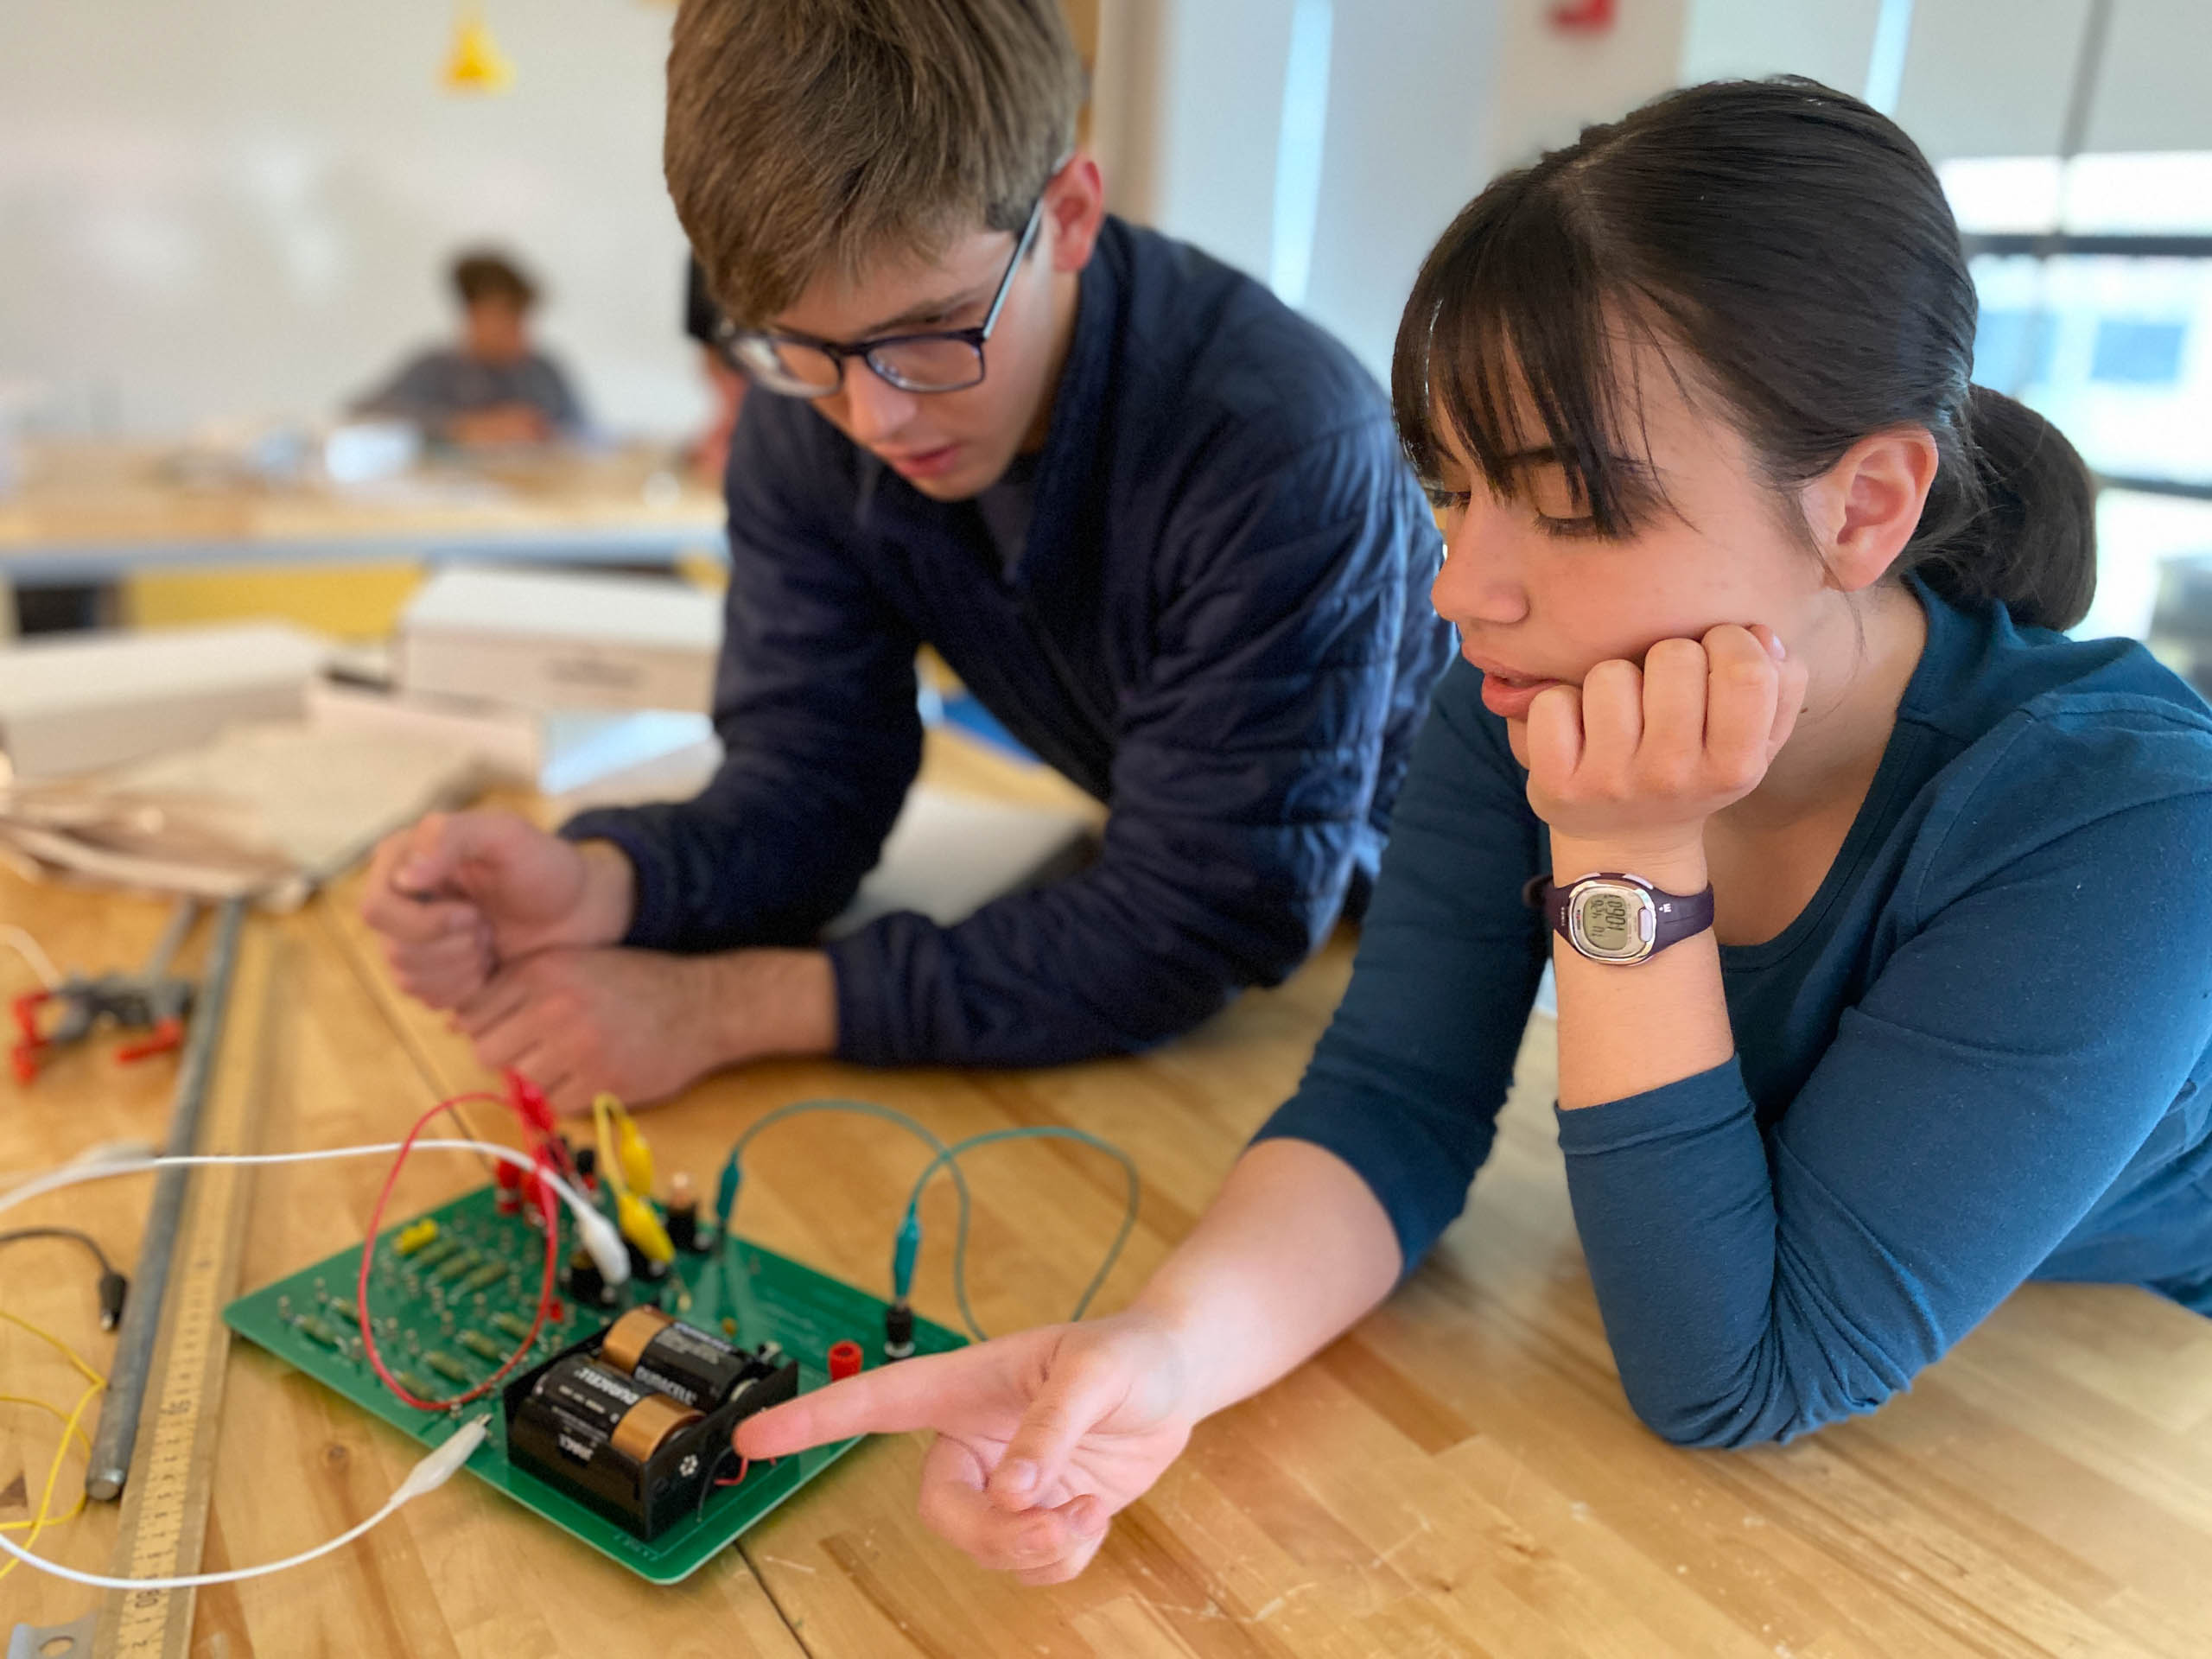 two teens working on circuit board in class.